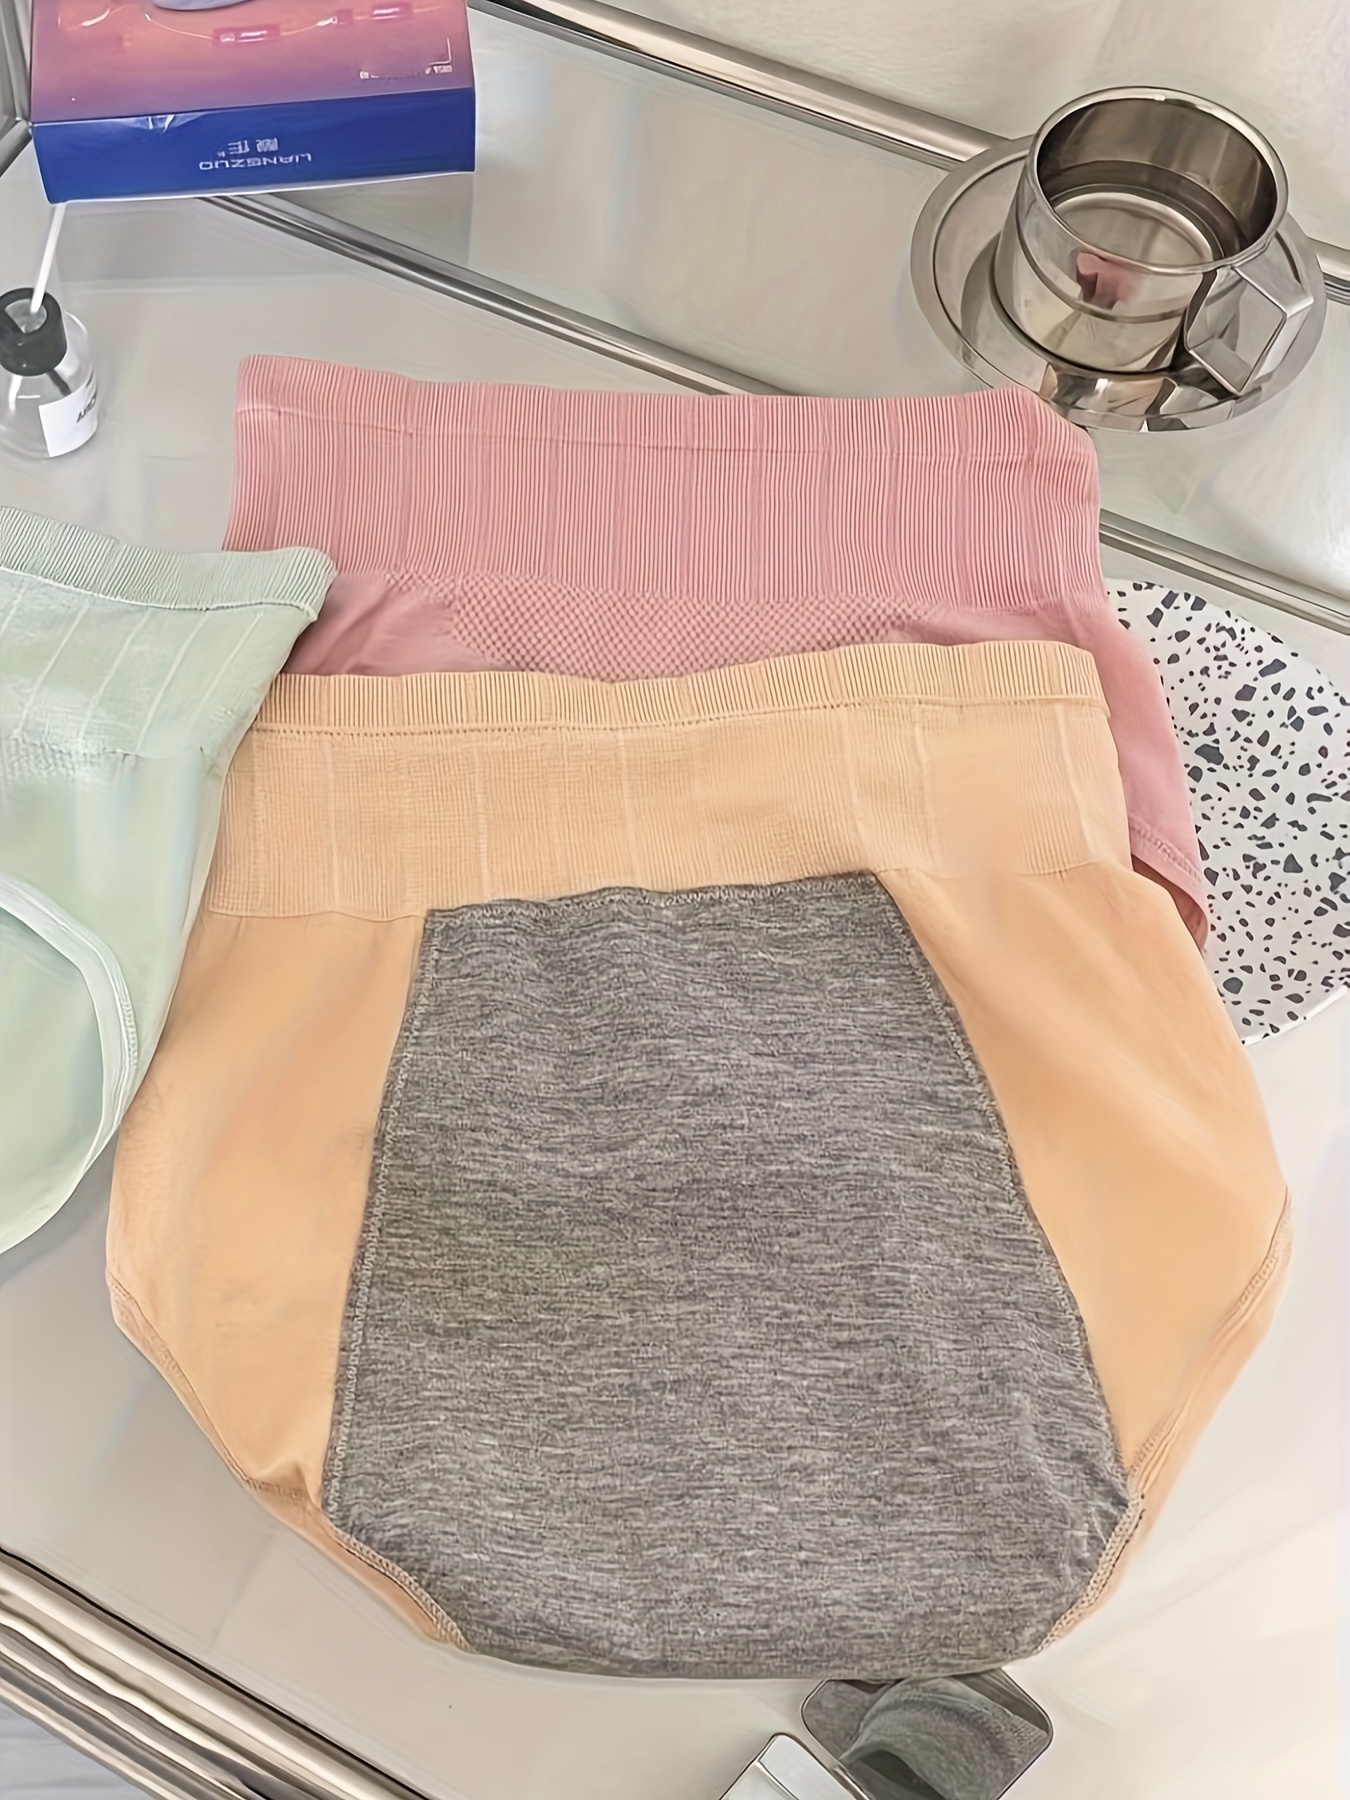 Leak Period Panties Menstrual Cotton Briefs Breathable Underwear